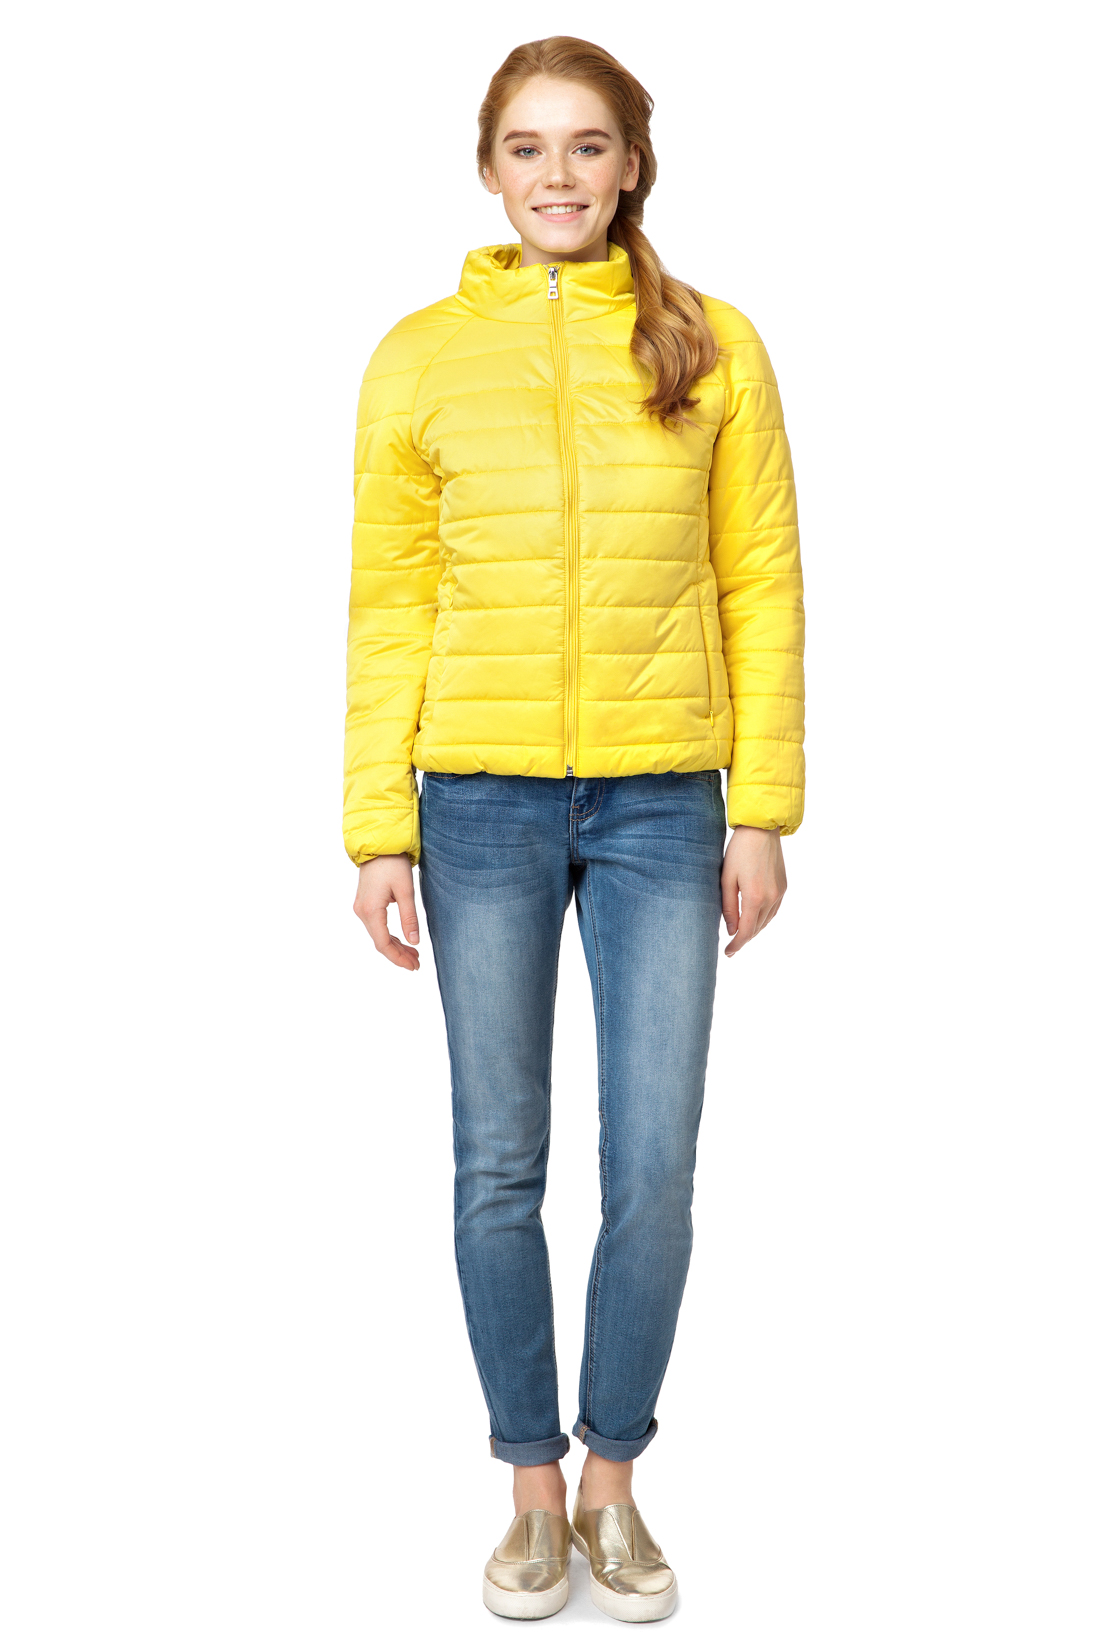 Куртка в спортивном стиле (арт. baon B037007), размер S, цвет желтый Куртка в спортивном стиле (арт. baon B037007) - фото 5